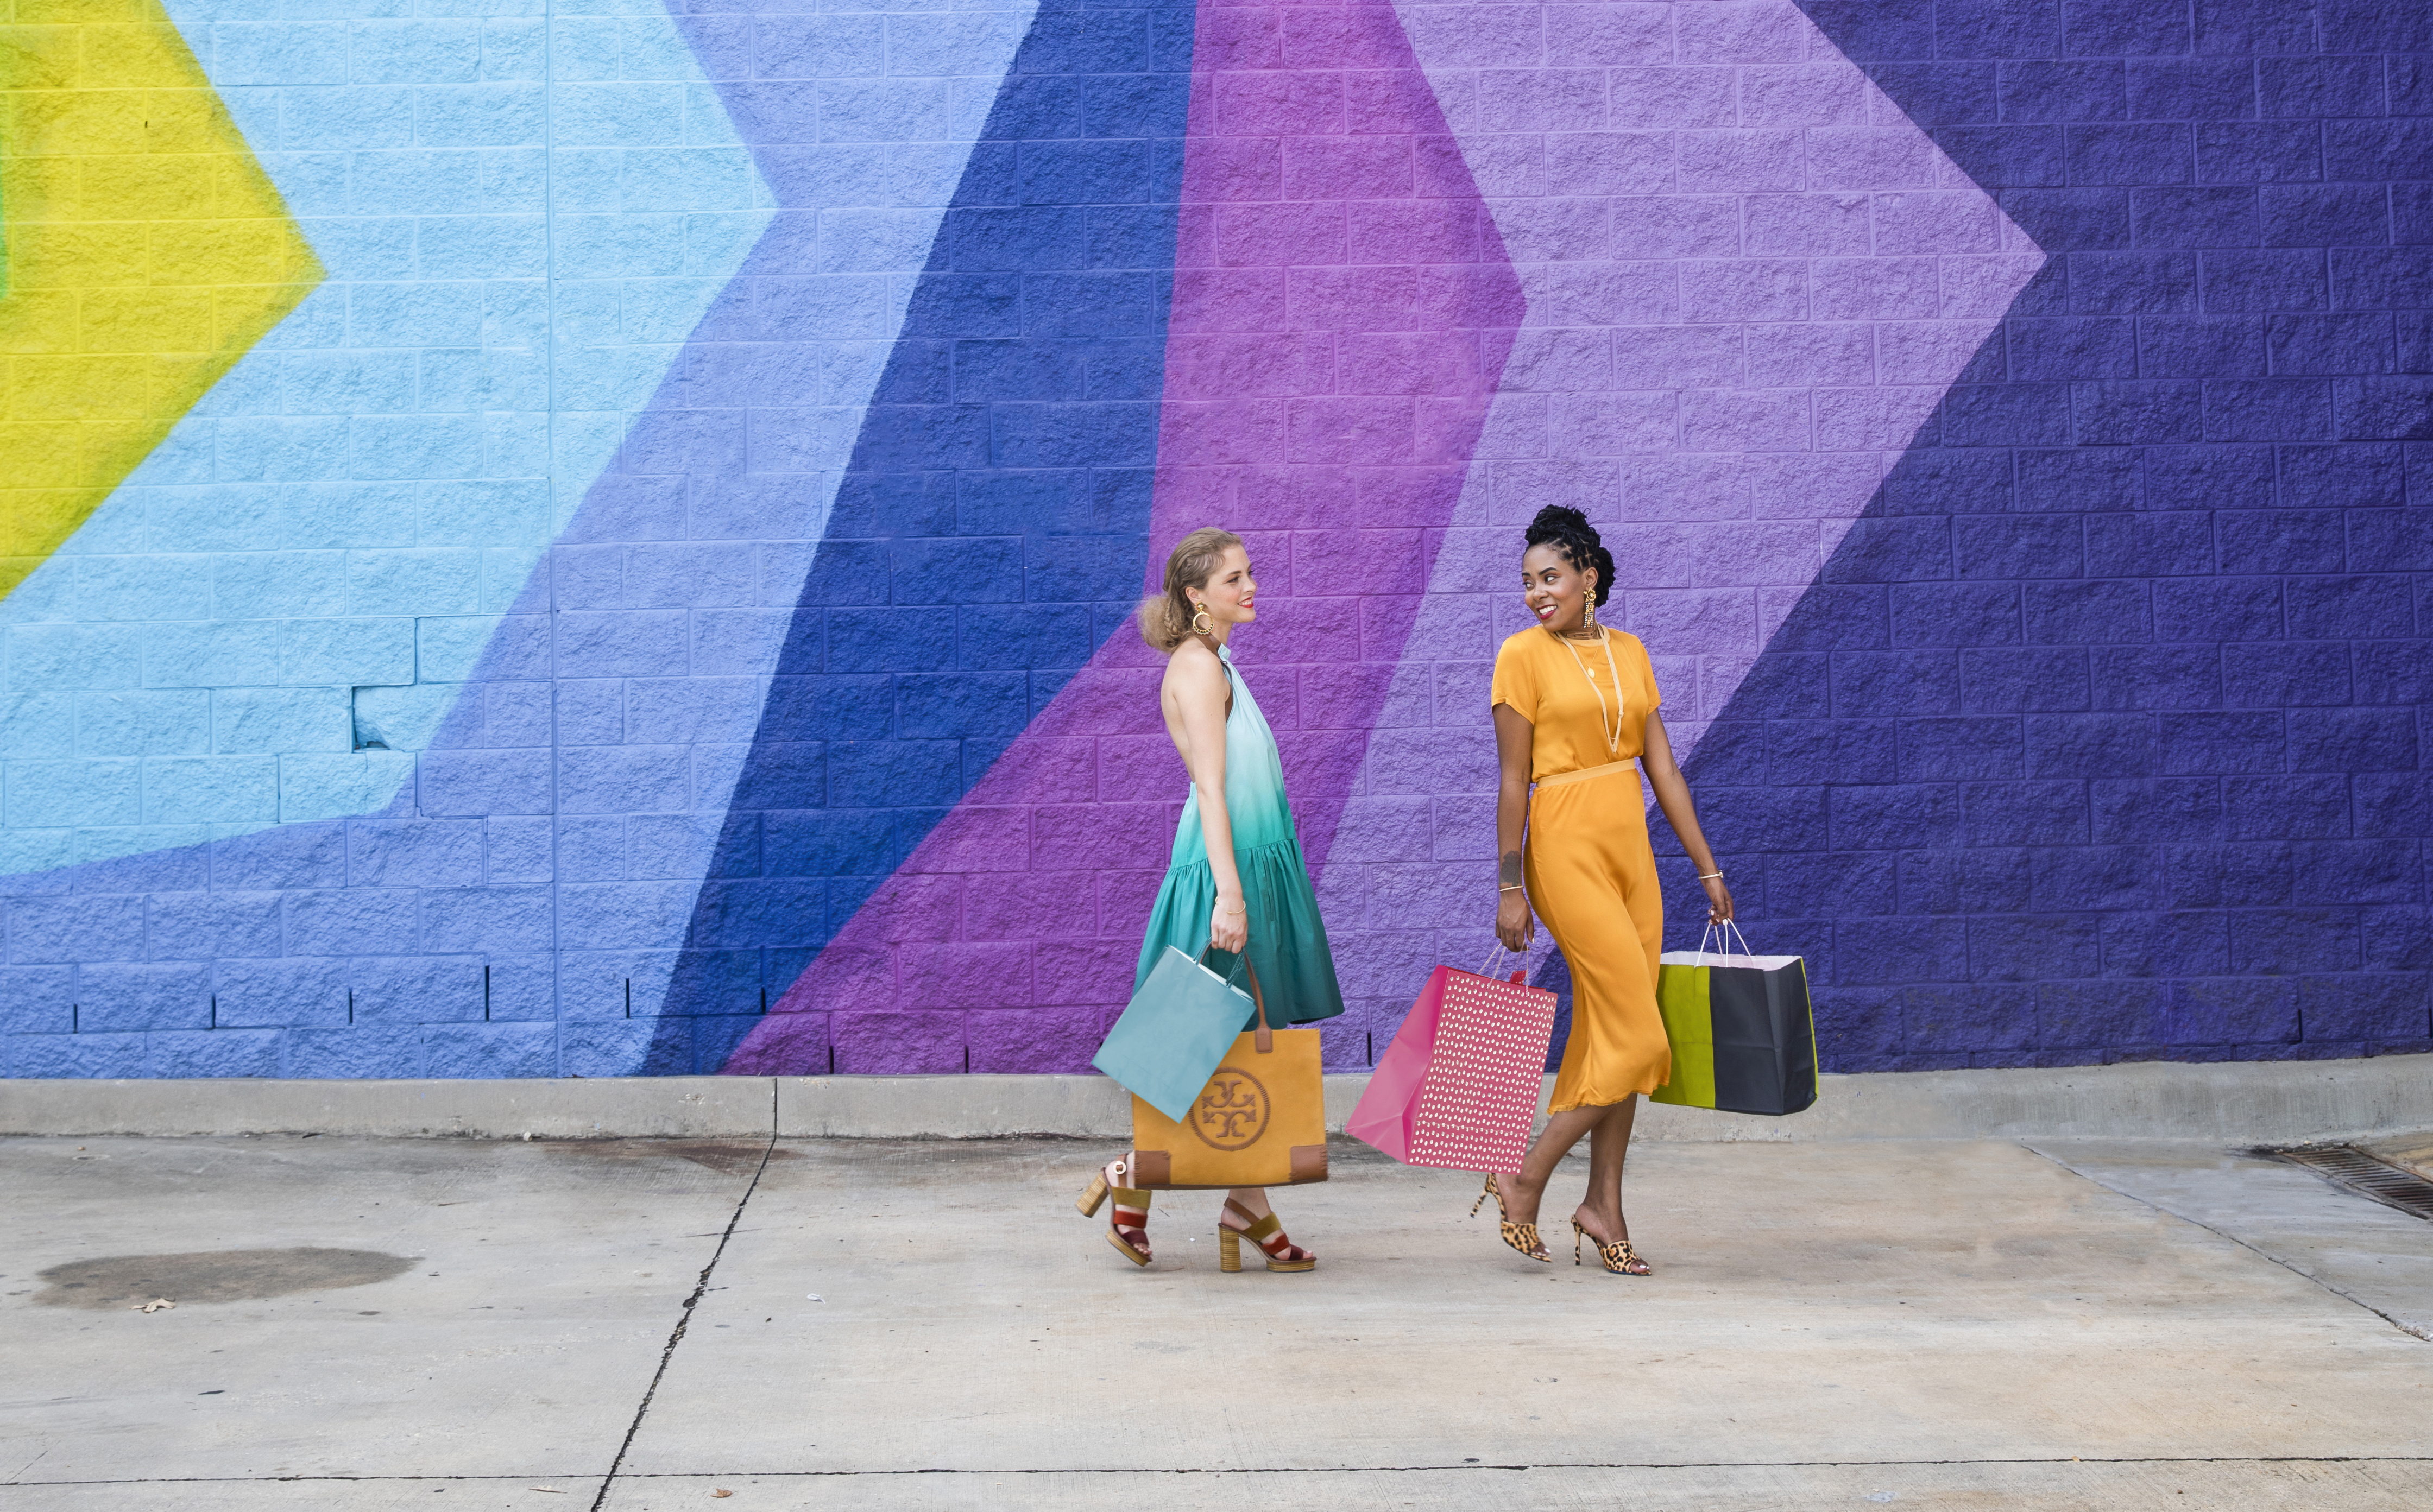 70+ women's boutiques to shop around Baton Rouge - [225]